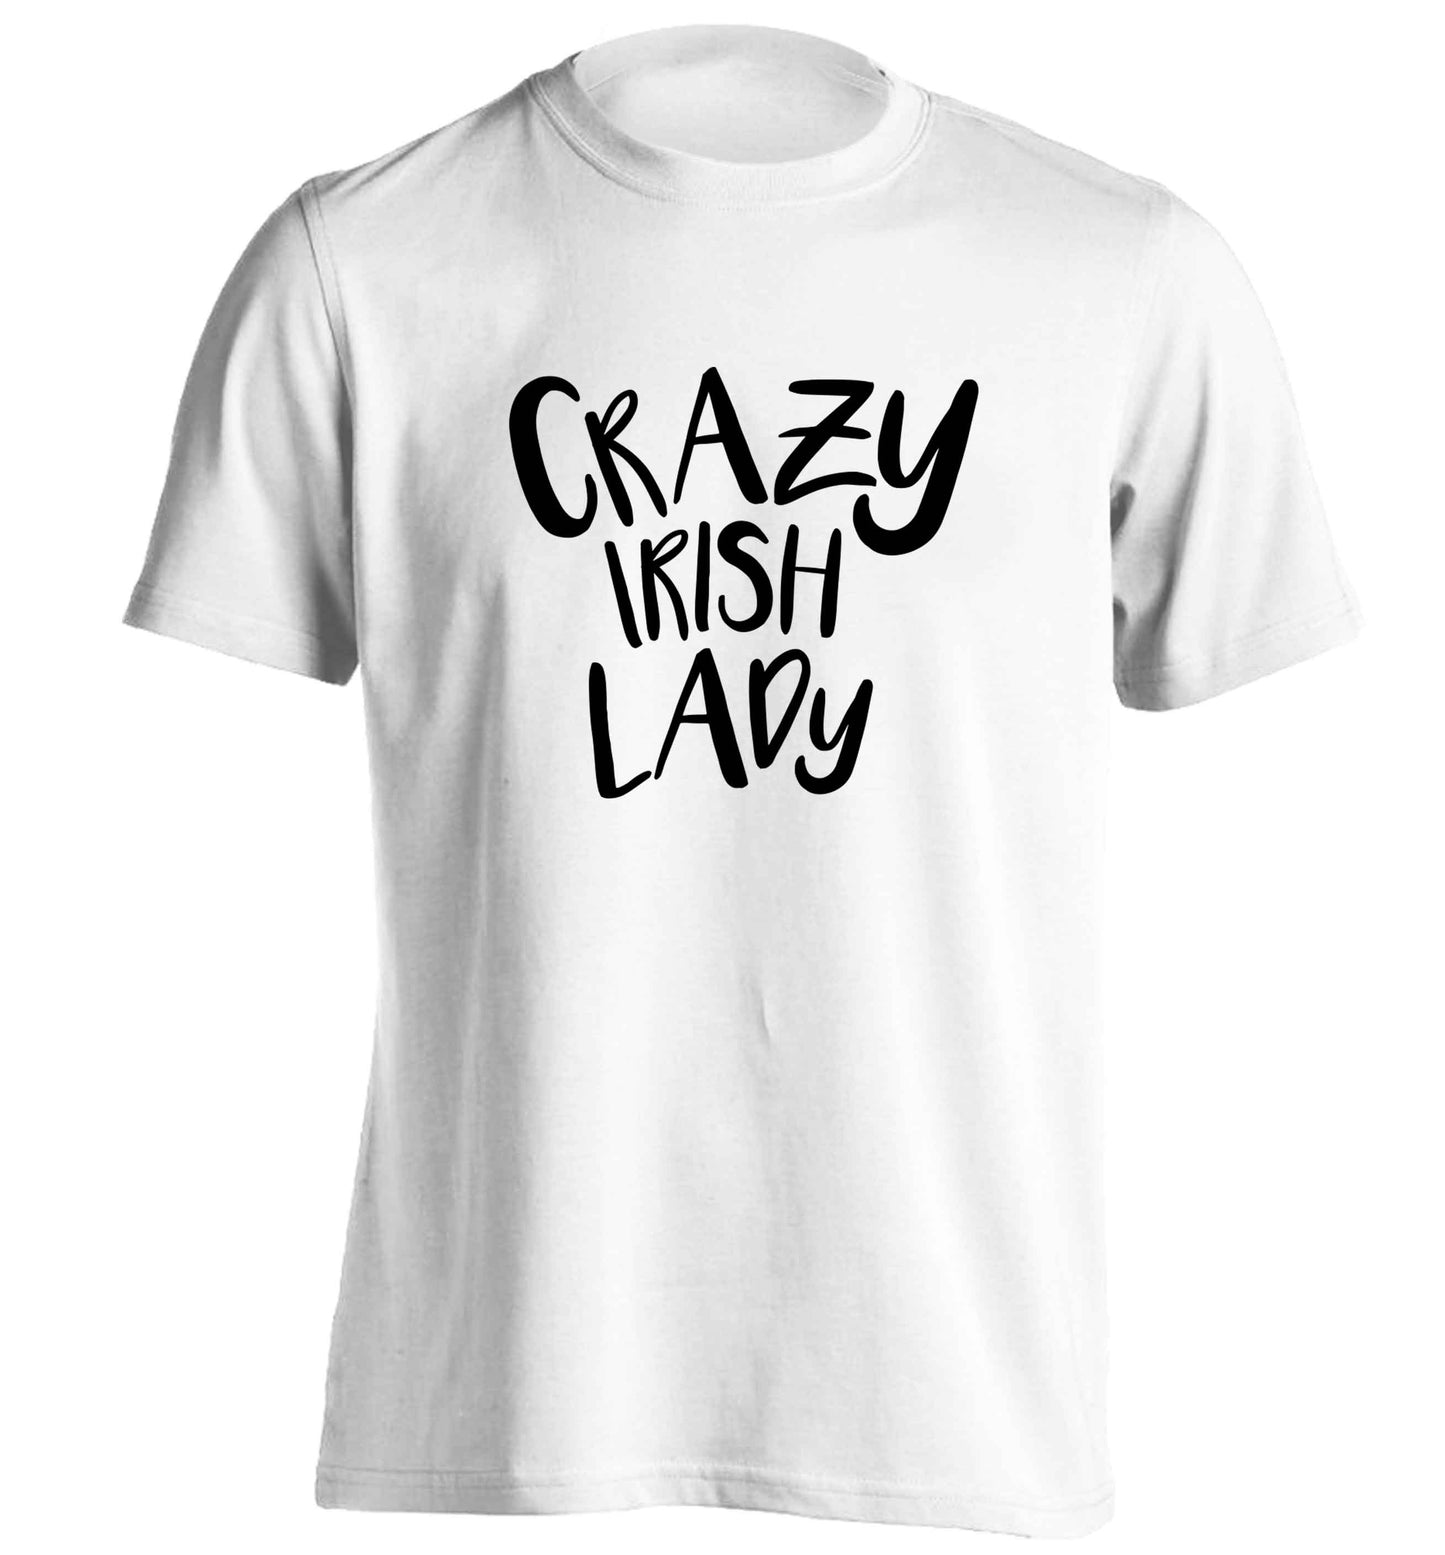 Crazy Irish lady adults unisex white Tshirt 2XL